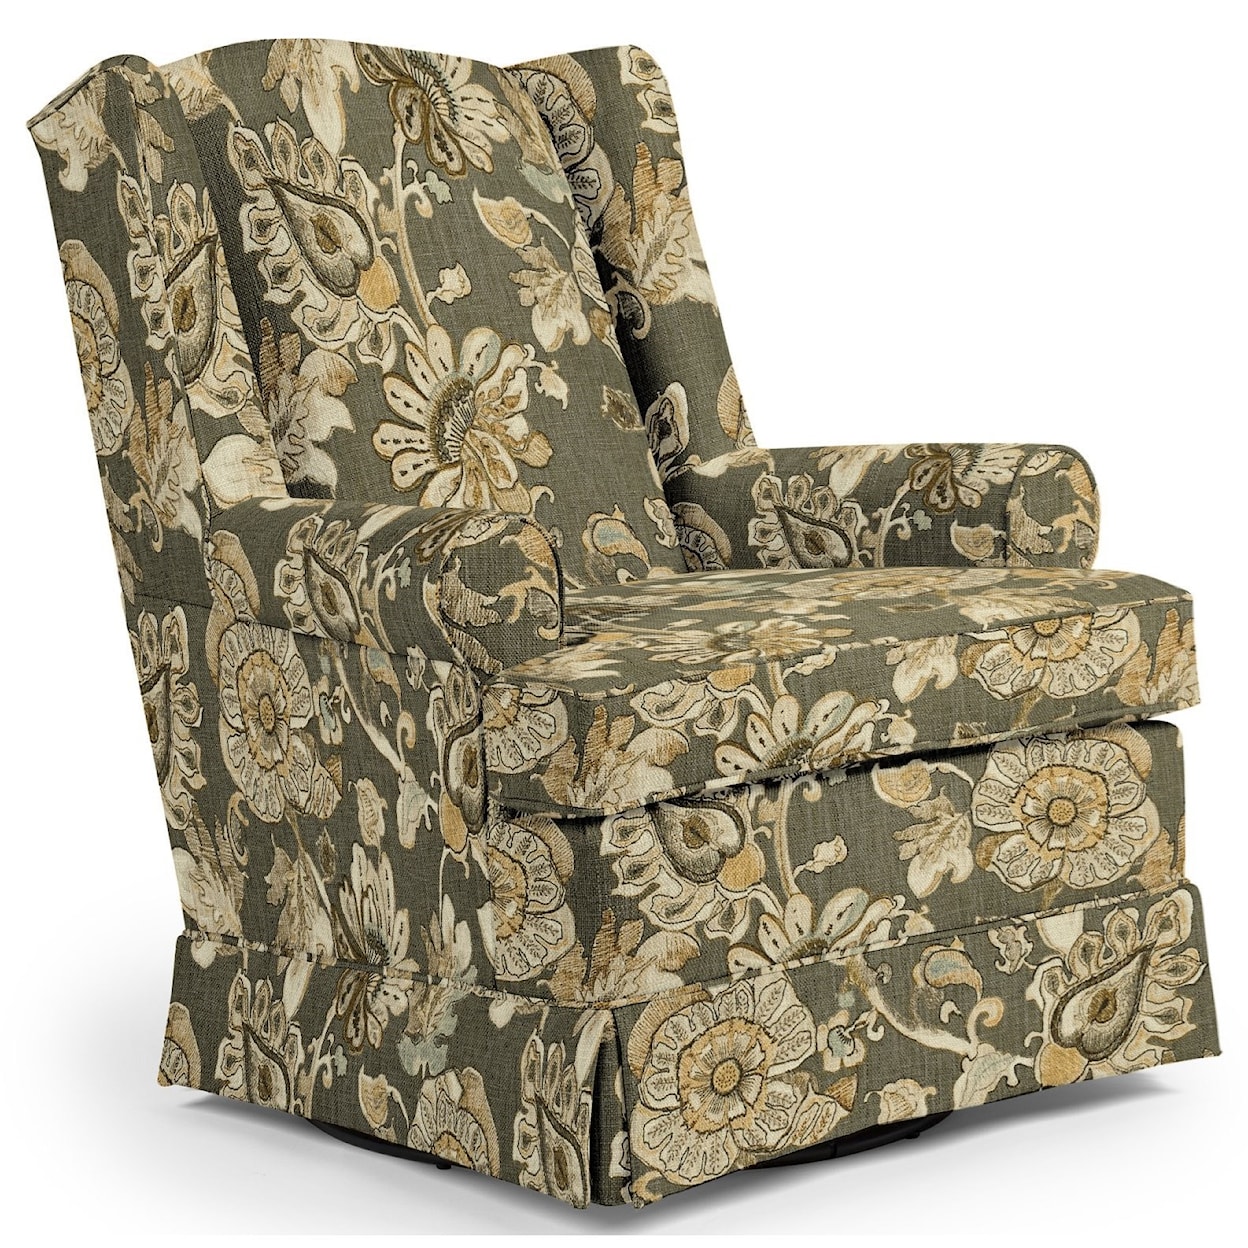 Best Home Furnishings Roni Roni Swivel Glider Chair